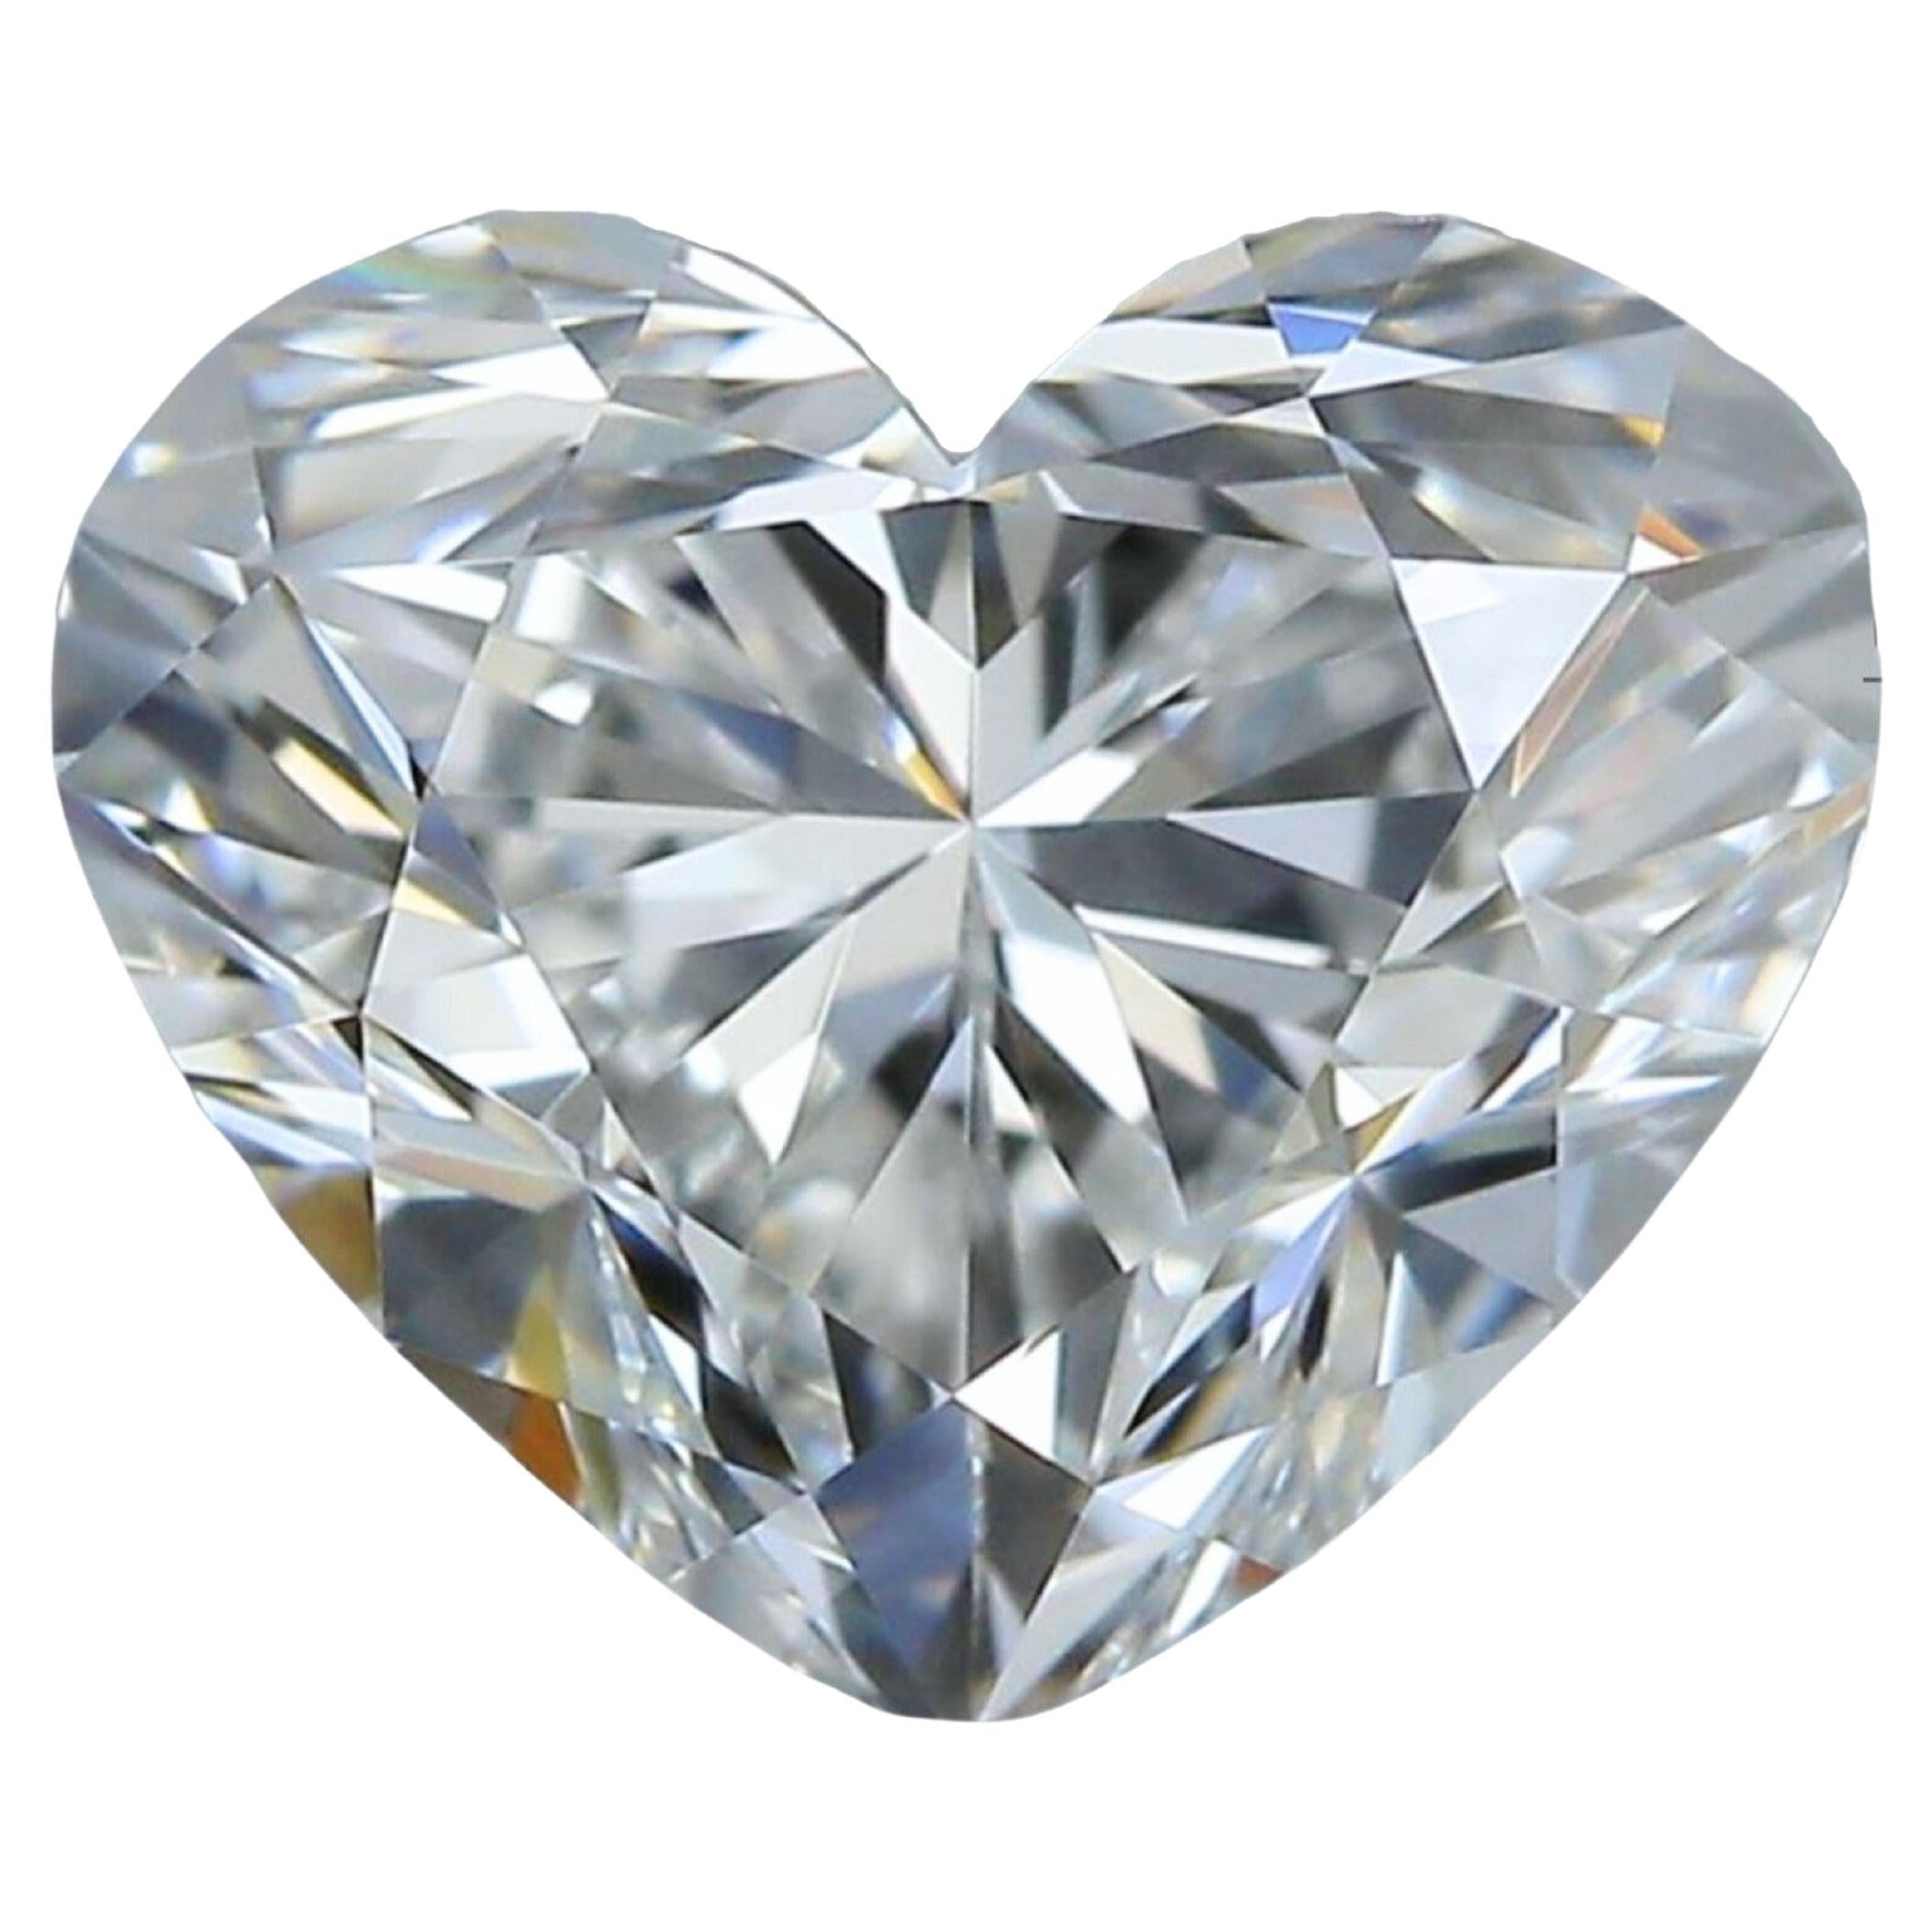 Sparkling 1 Carat Heart Brilliant Cut Diamond For Sale